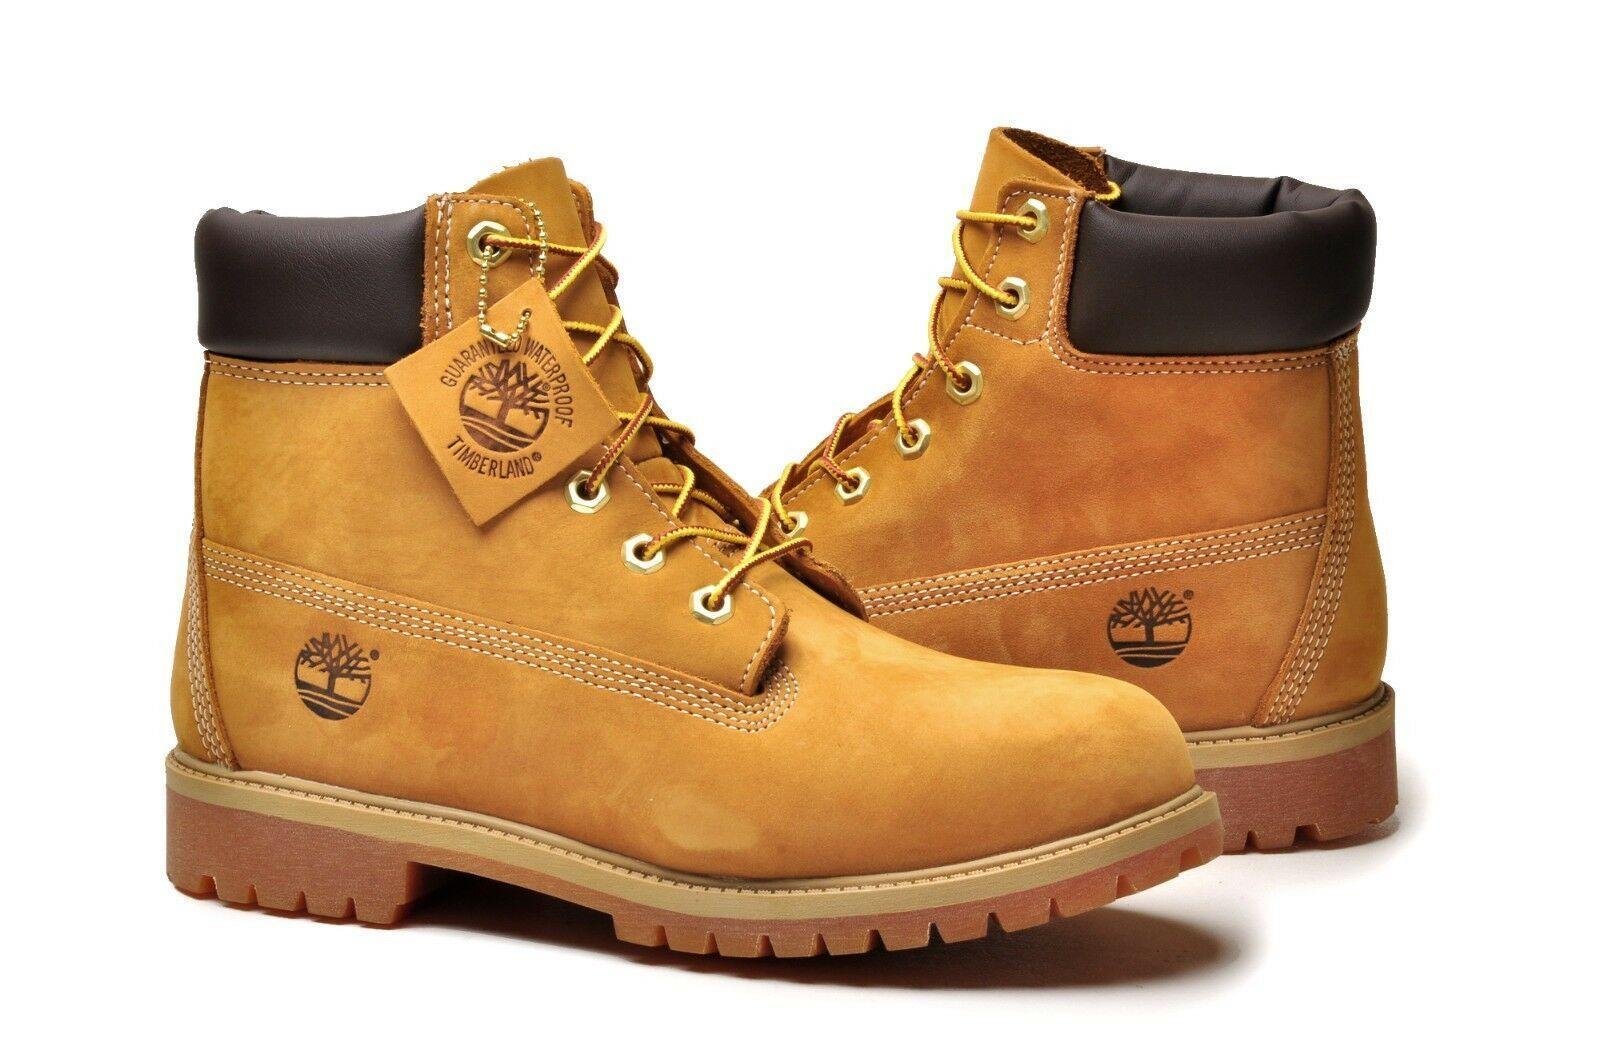 Timberland Womens Premium 6"" Waterproof Leather Boots Shoes - Wheat Nubuck - US 6